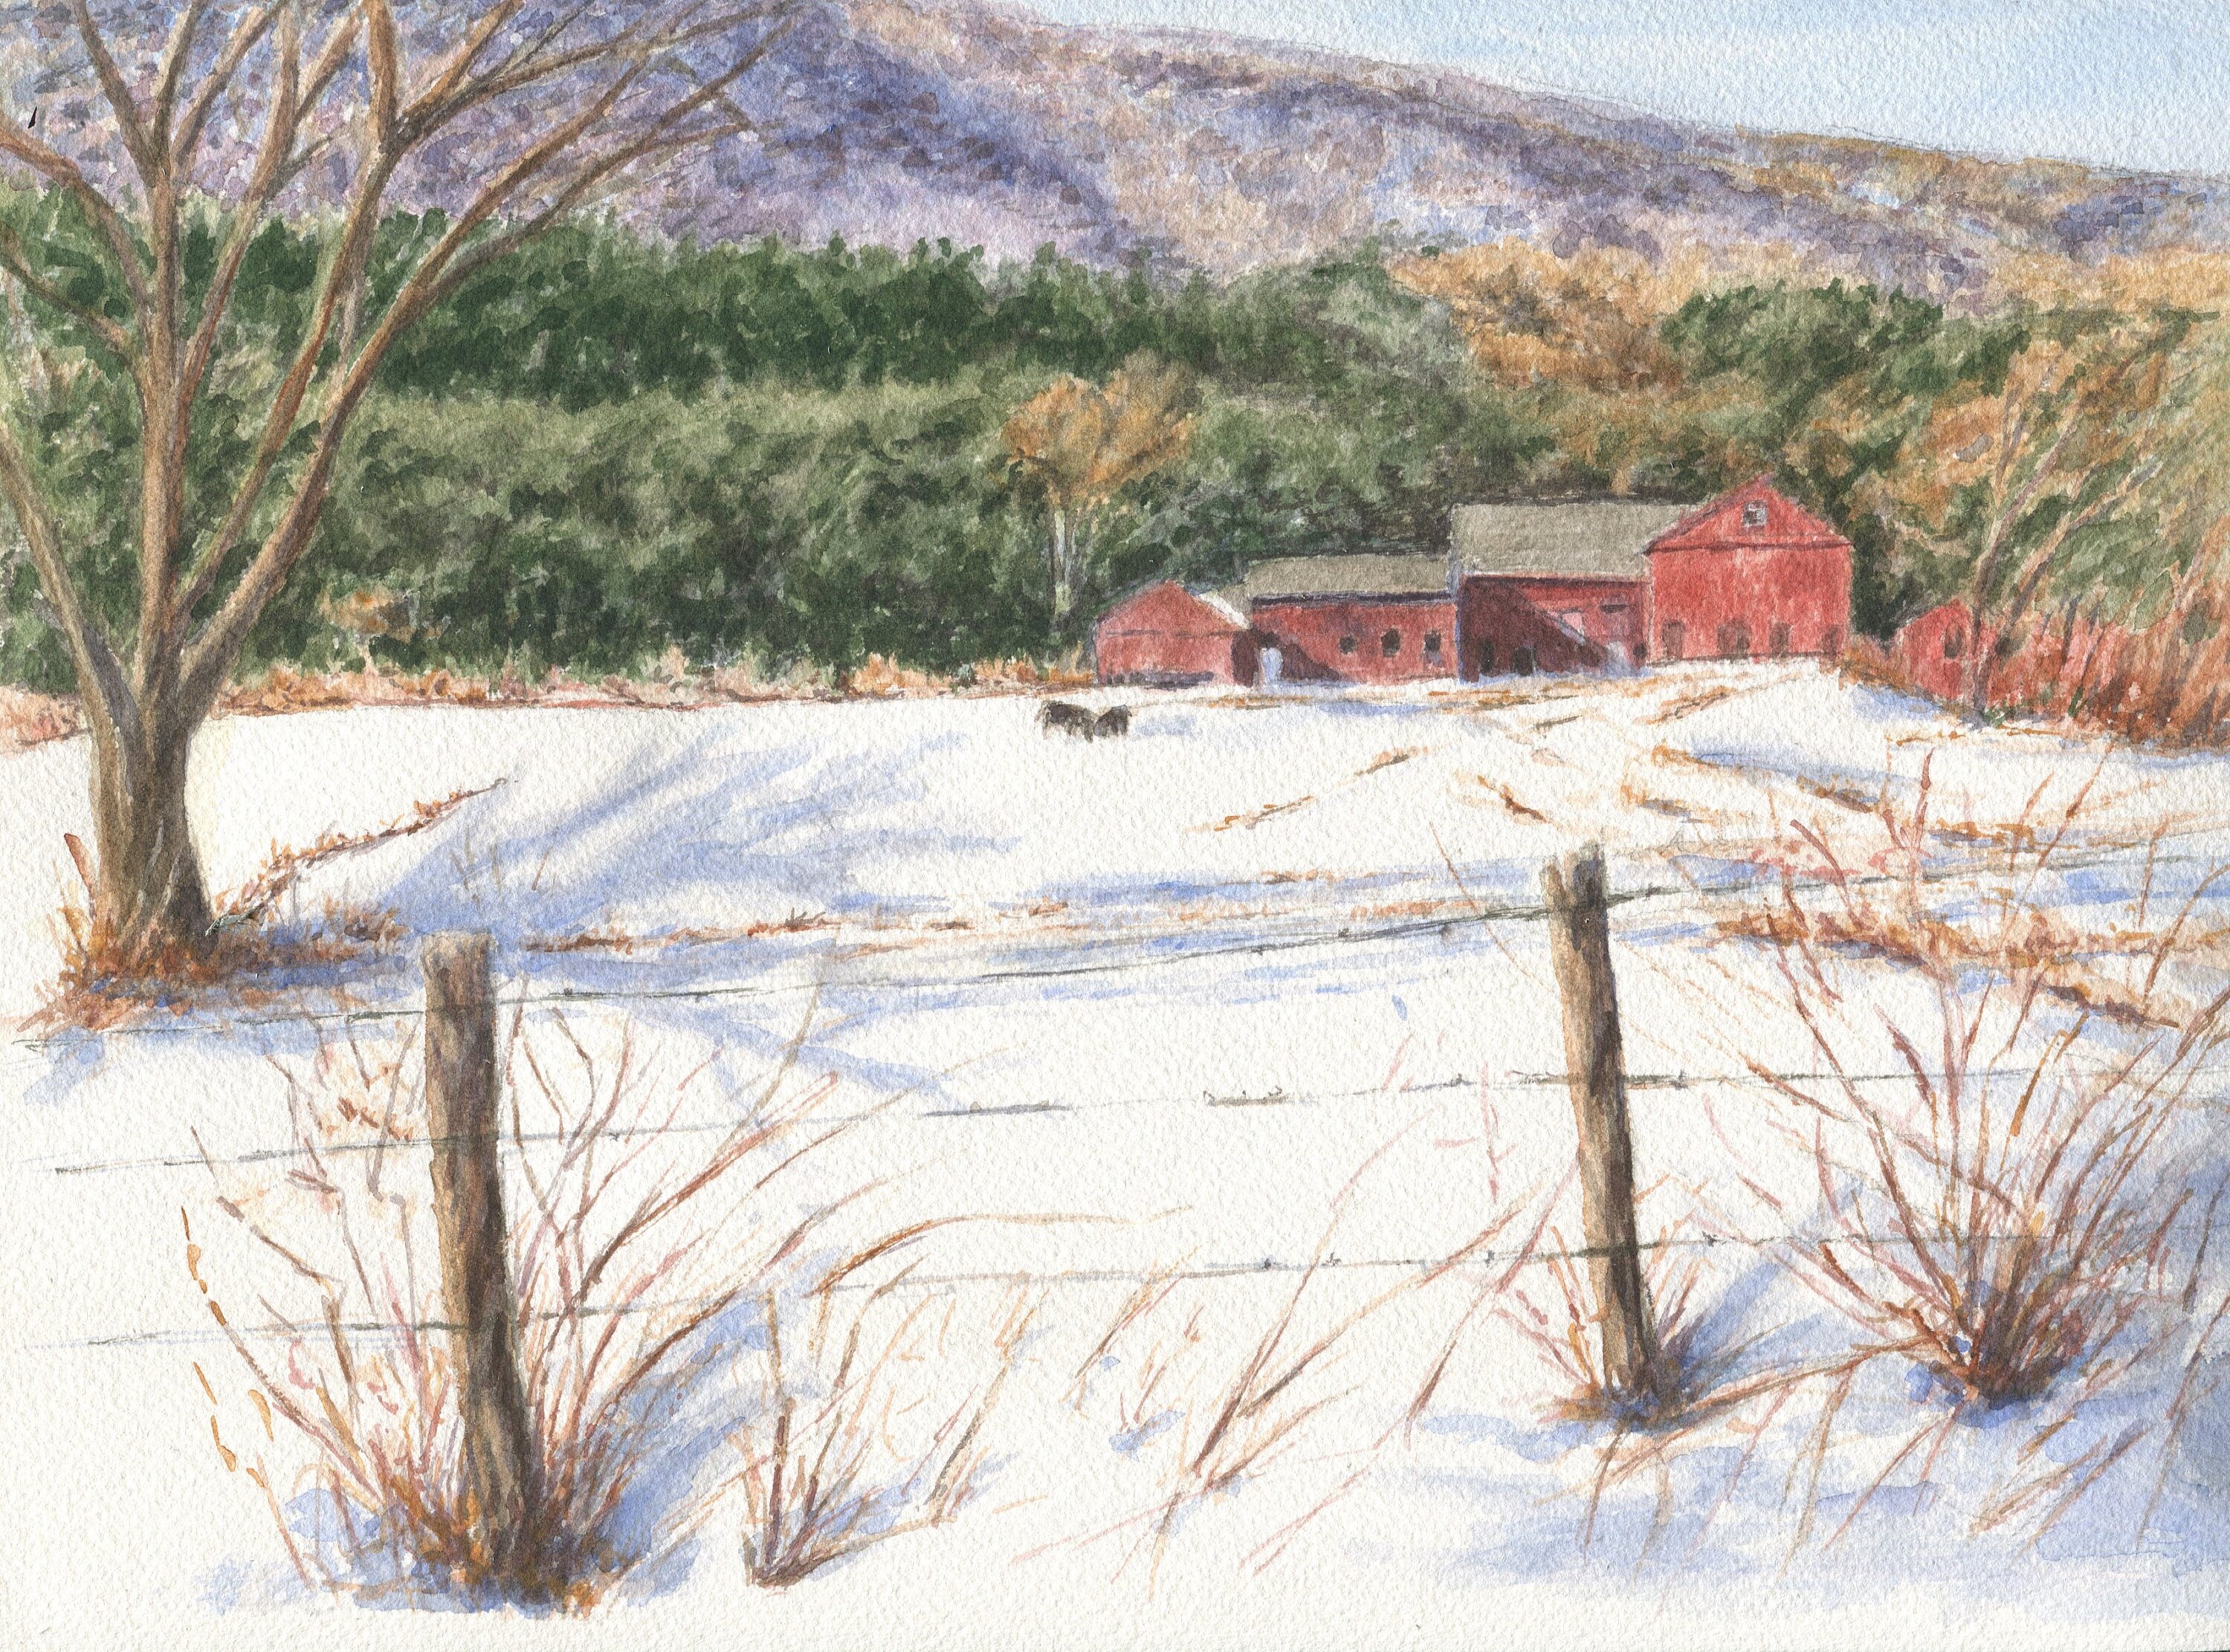 Watercolor painting Snow scene original watercolor painting 9x12 A4 size Original artwork Winter watercolor painting